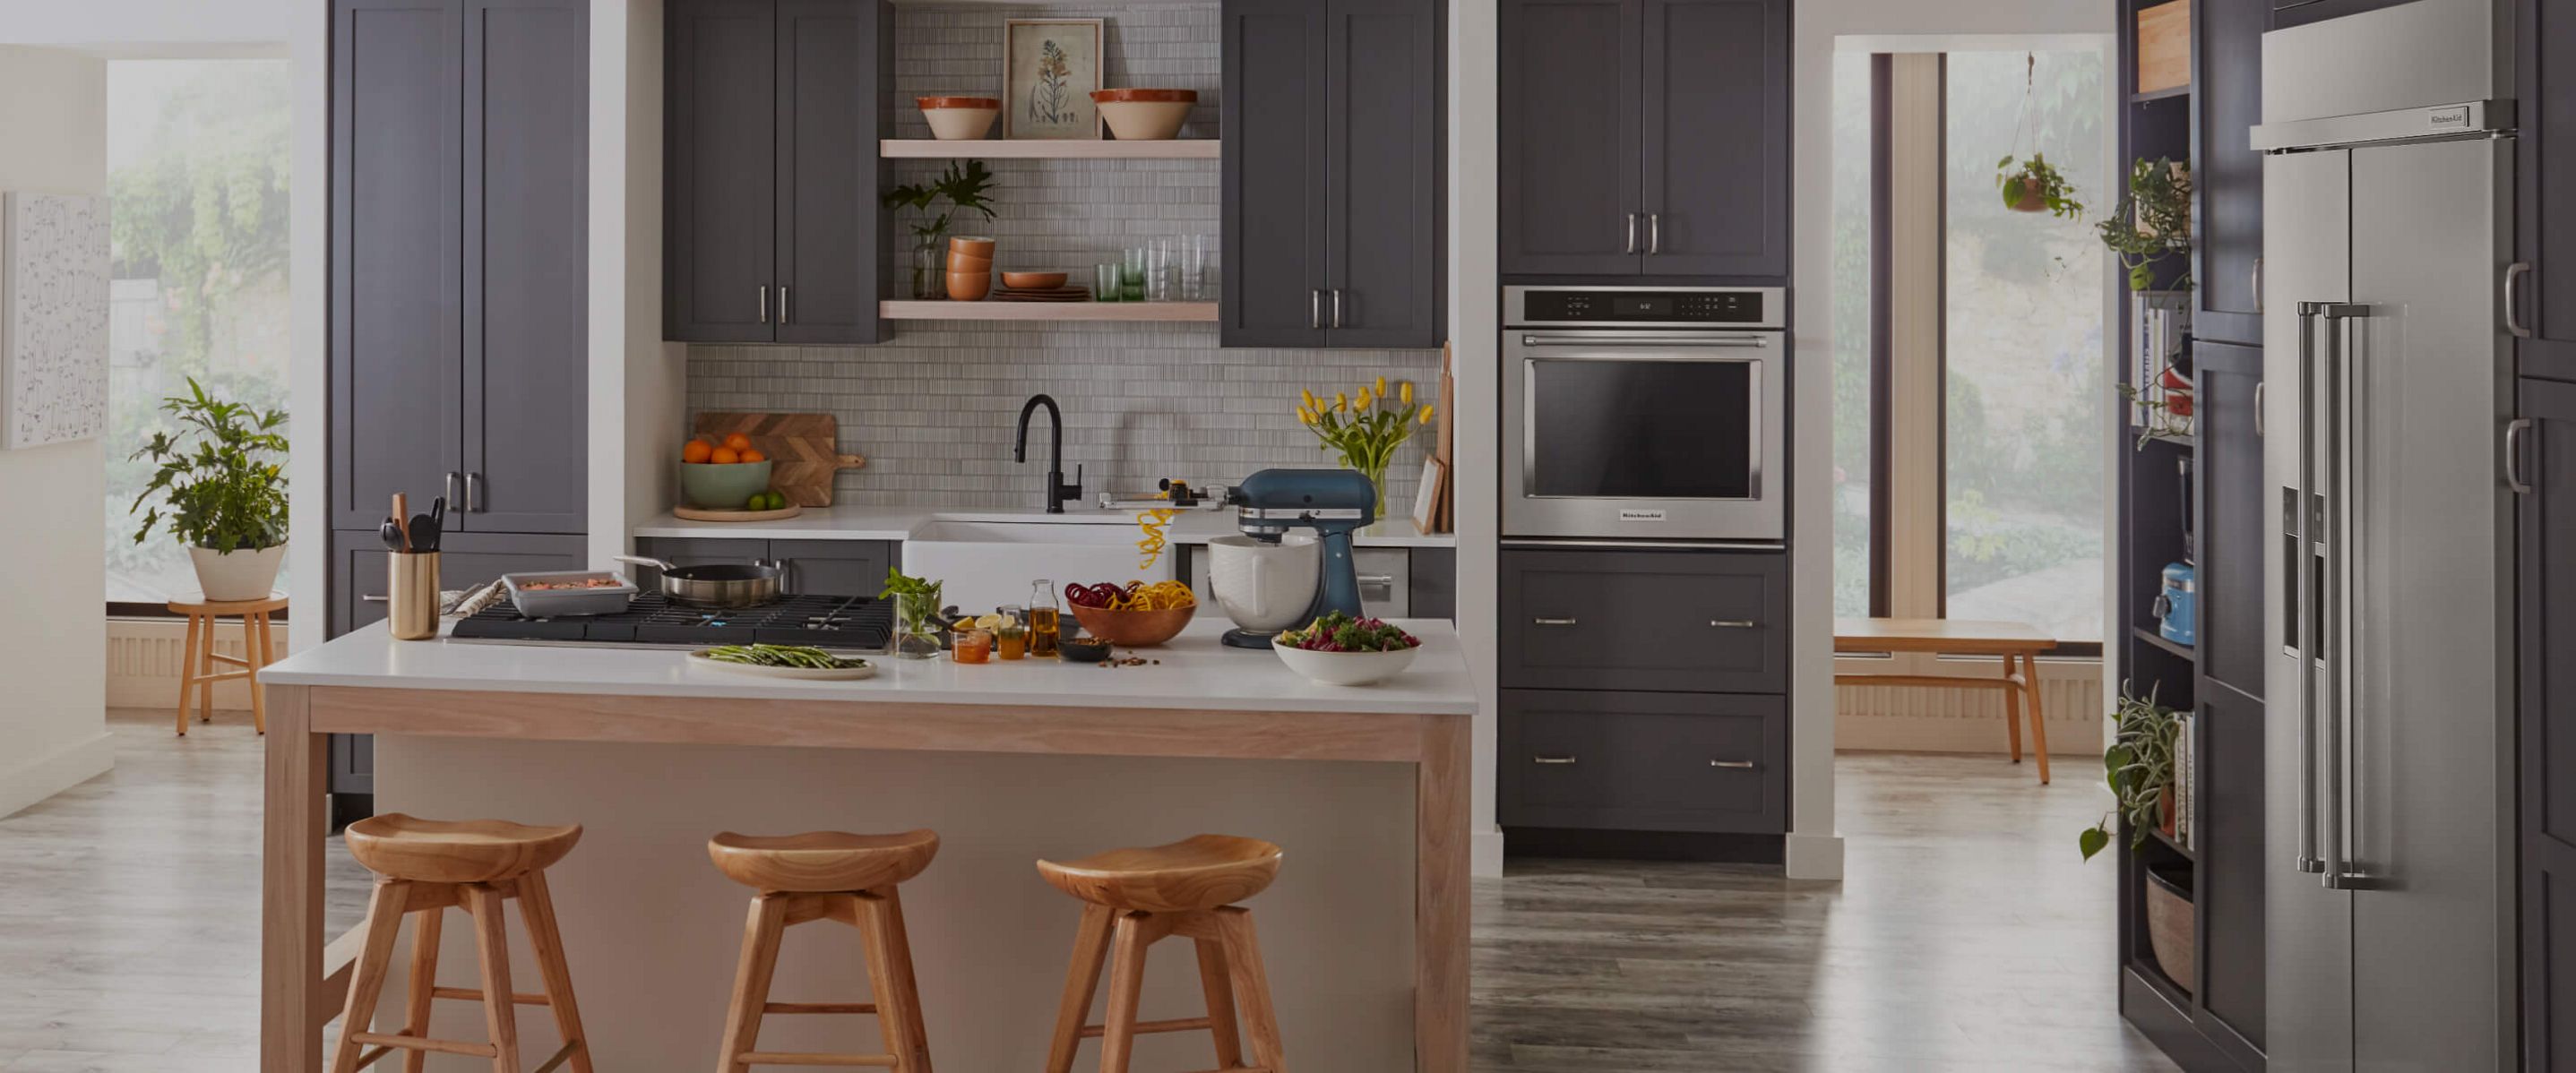 42" KitchenAid® Built-In Side-by-Side Refrigerator KBSN702M installed in kitchen